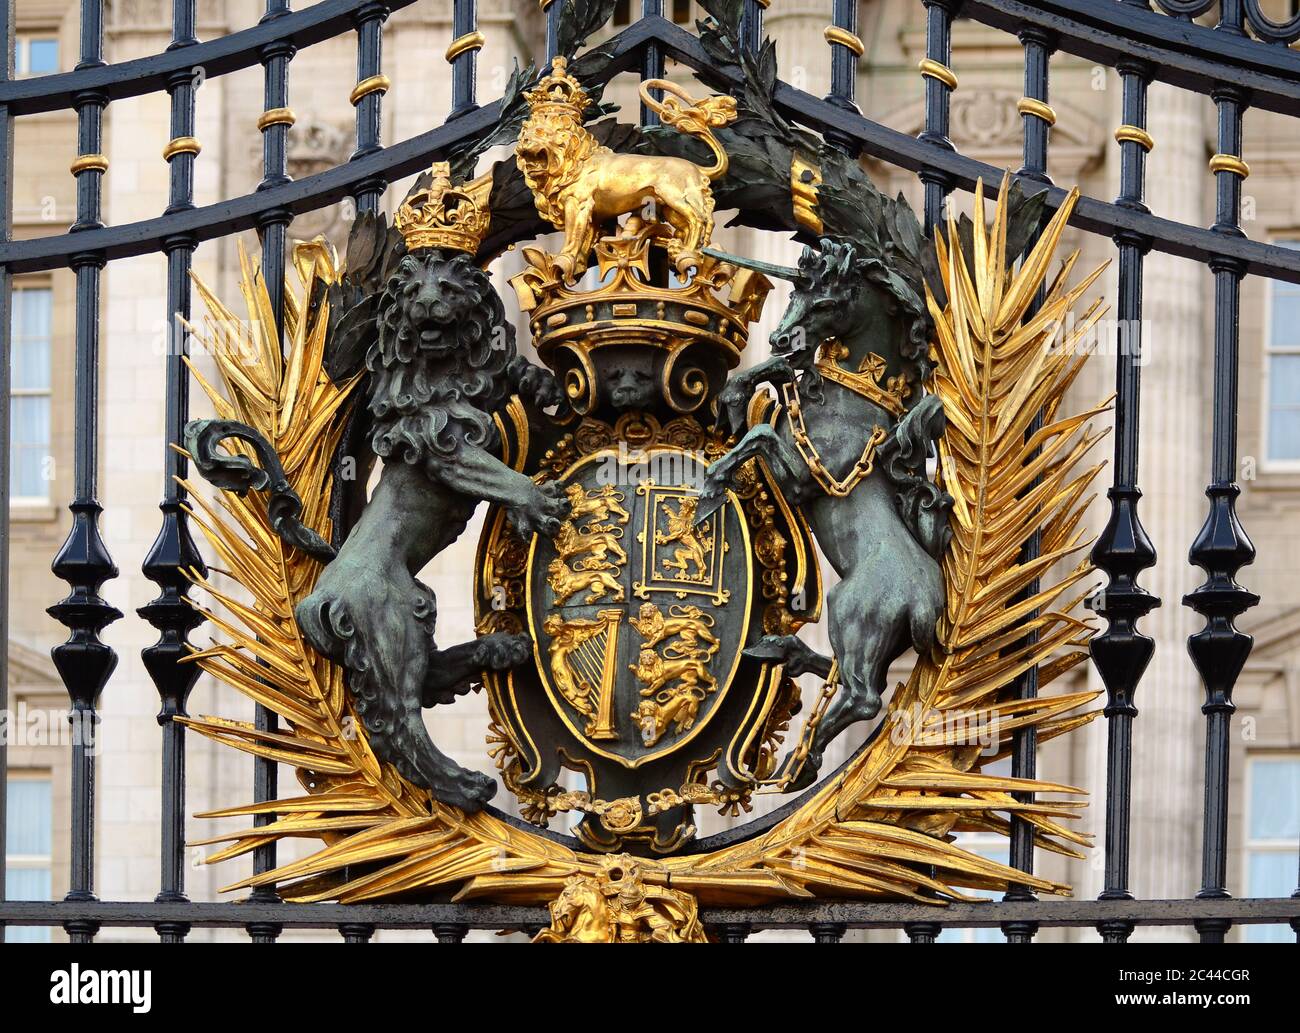 Royal Coat of Arms on the Gate of Buckingham Palace, London, UK Stock Photo